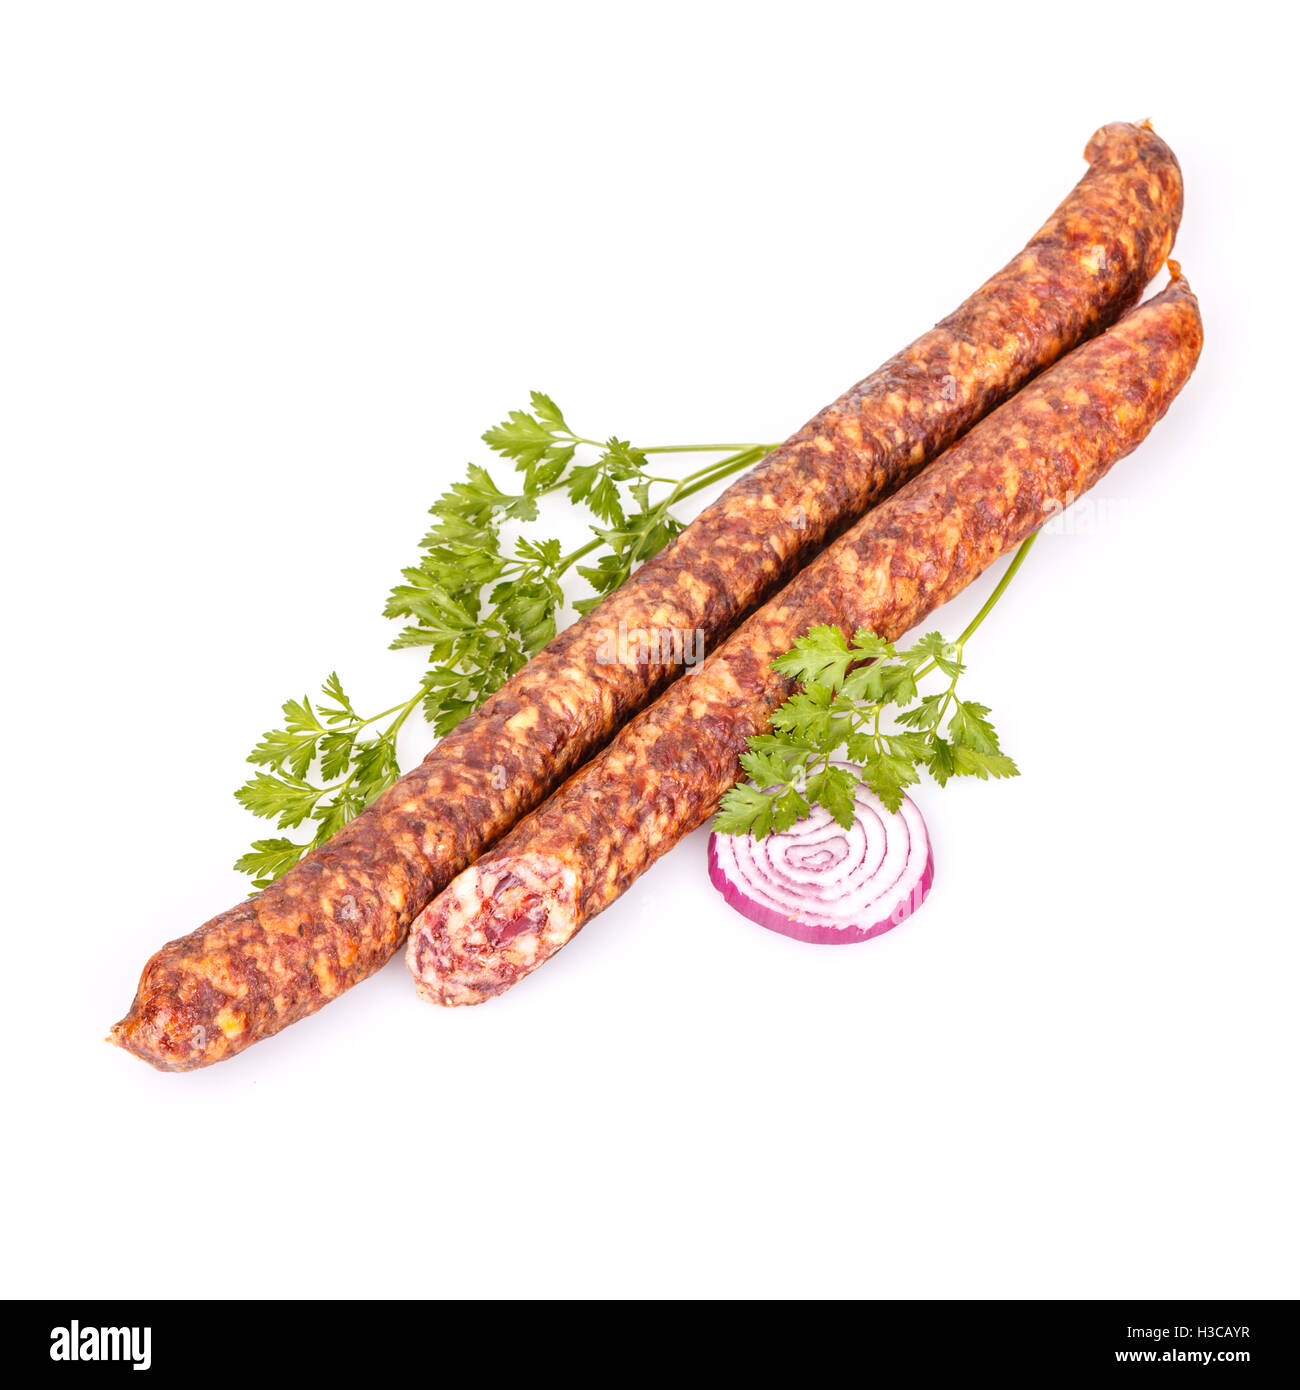 Salami smoked sausage on white background Stock Photo